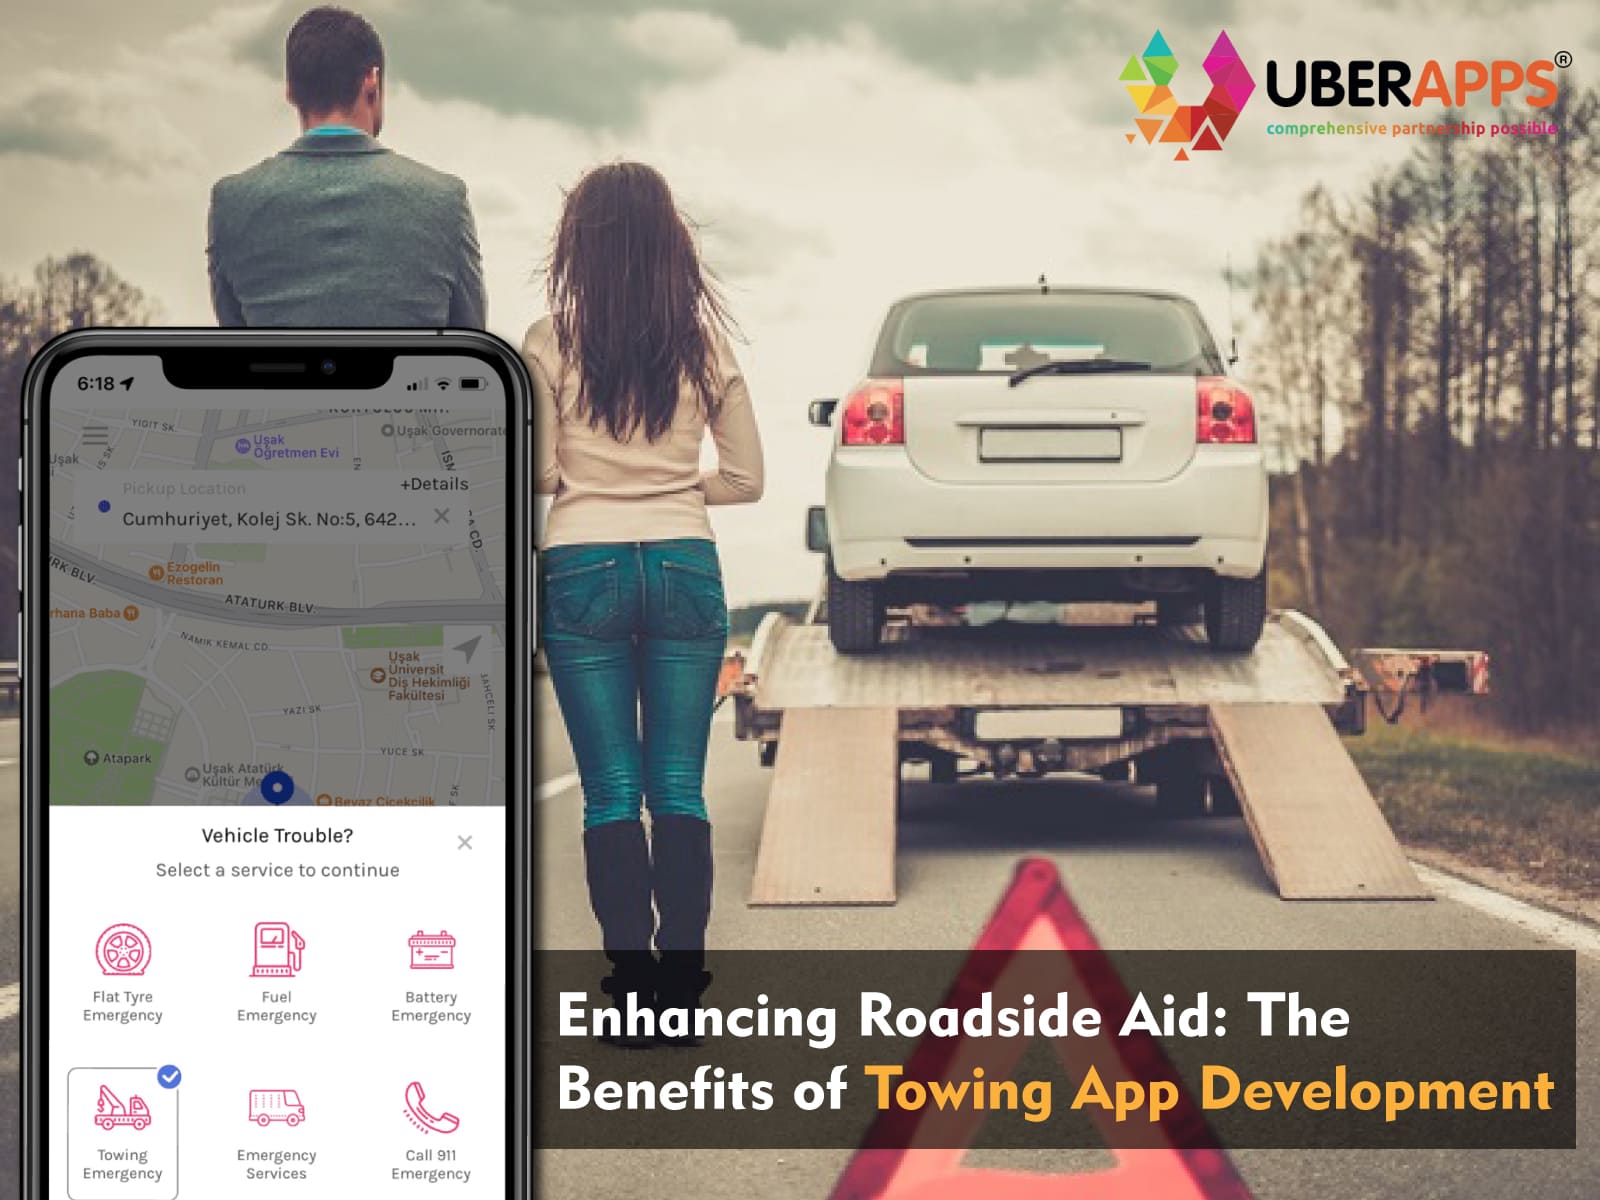 Enhancing Roadside Aid: The Benefits of Towing App Development